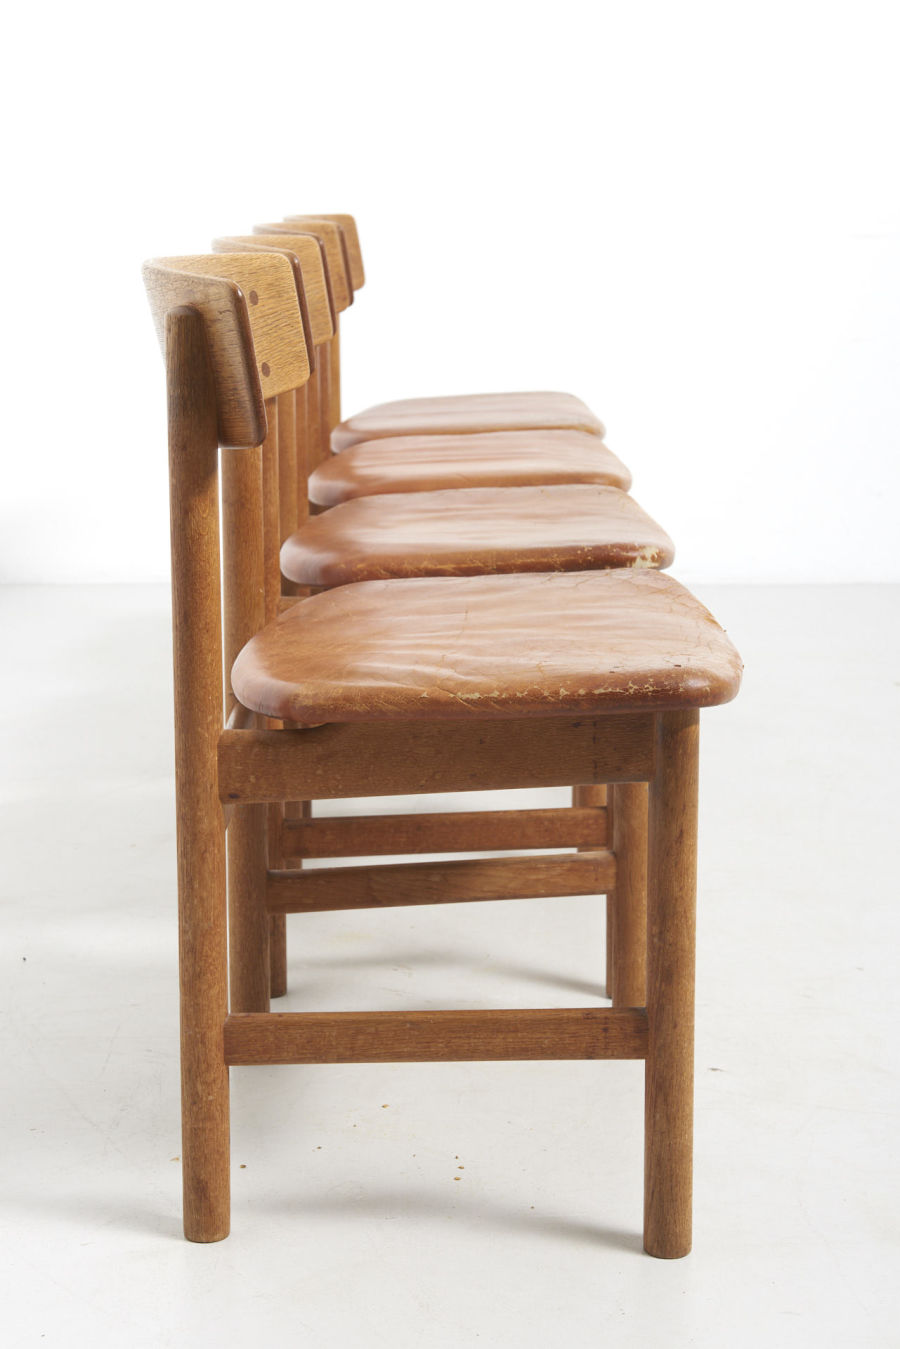 modestfurniture-vintage-2559-fredericia-chairs-borge-mogensen-model-23604